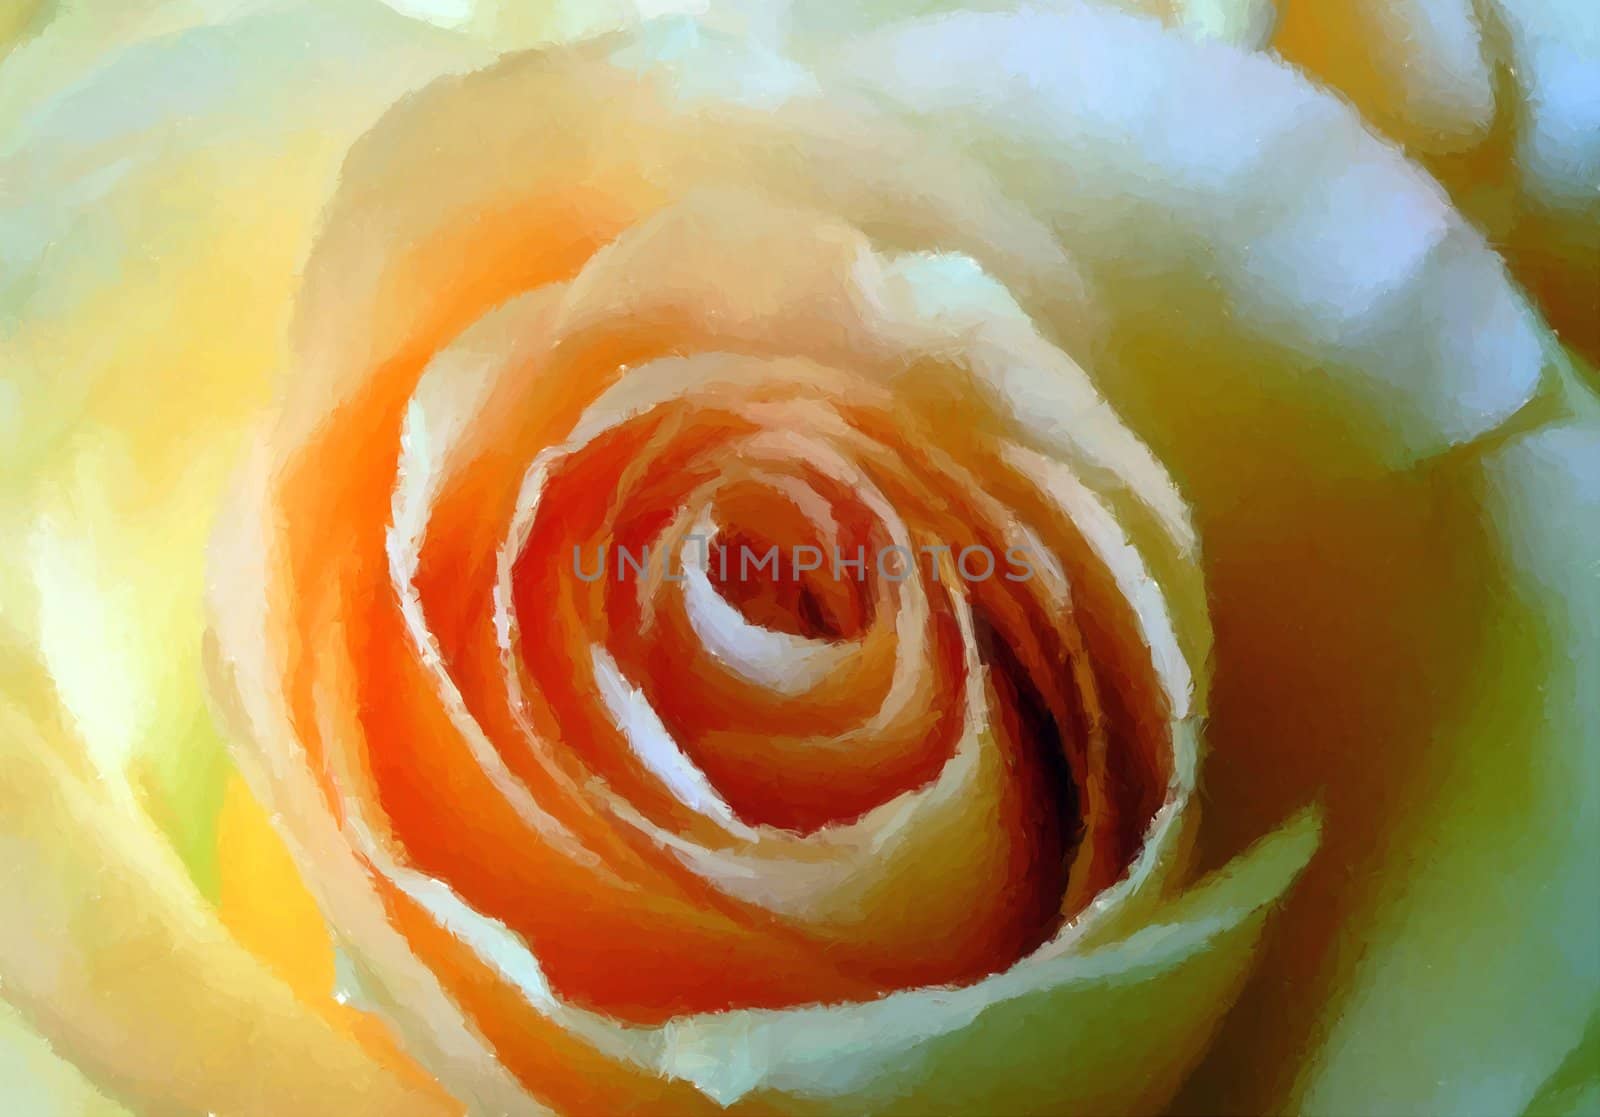 a close up of a beautiful apricot rose.